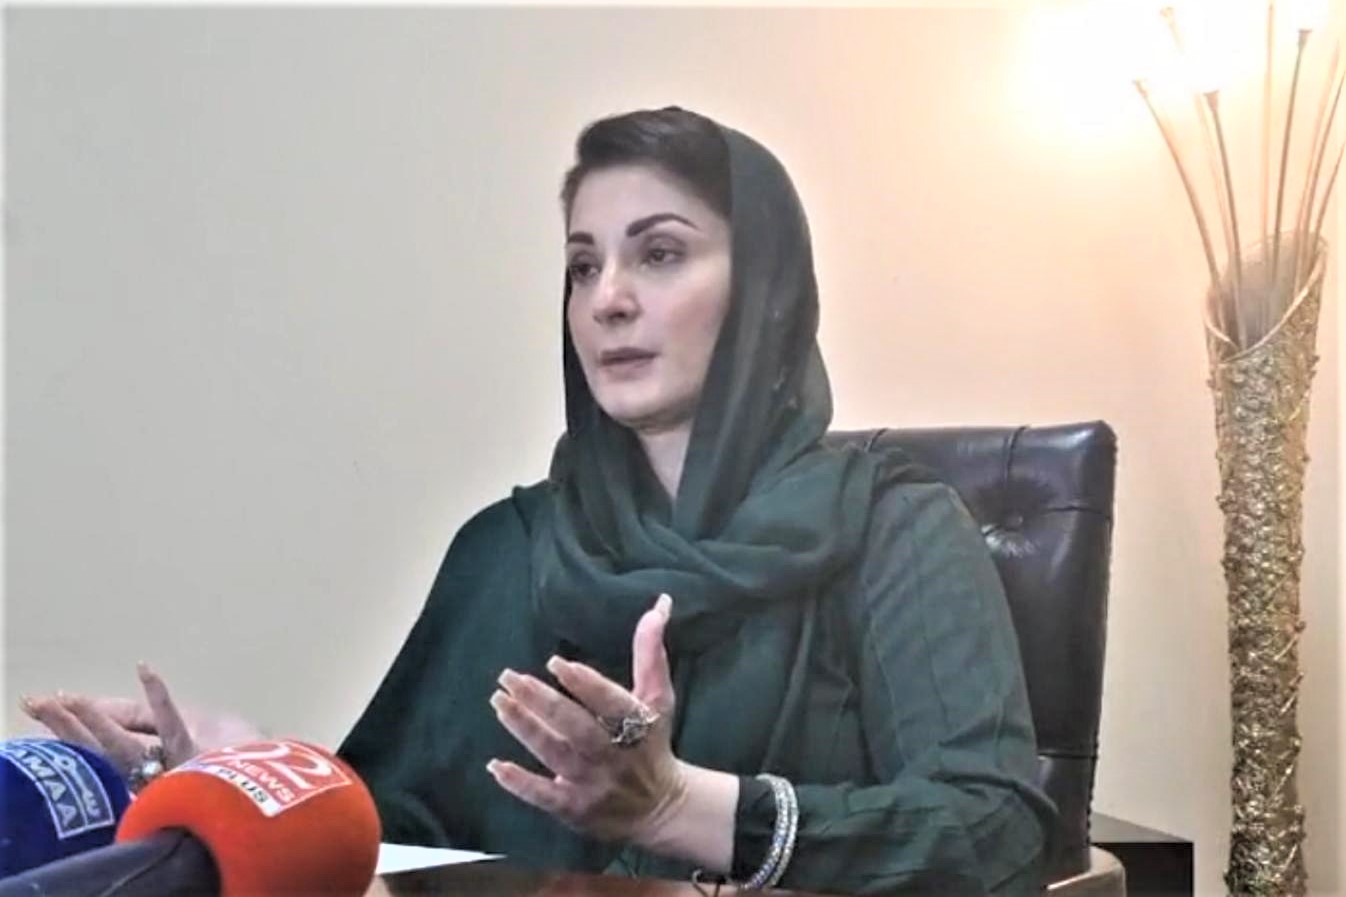 Maryam Nawaz Sharif shoves Colleague Uzma Kardar: وزیر اعلیٰ بنتے ہی مریم نواز کا بدل گیا تیور، اپنی ہی پارٹی کے ایم ایل اے کو دیا دھکا؟ ویڈیو وائرل